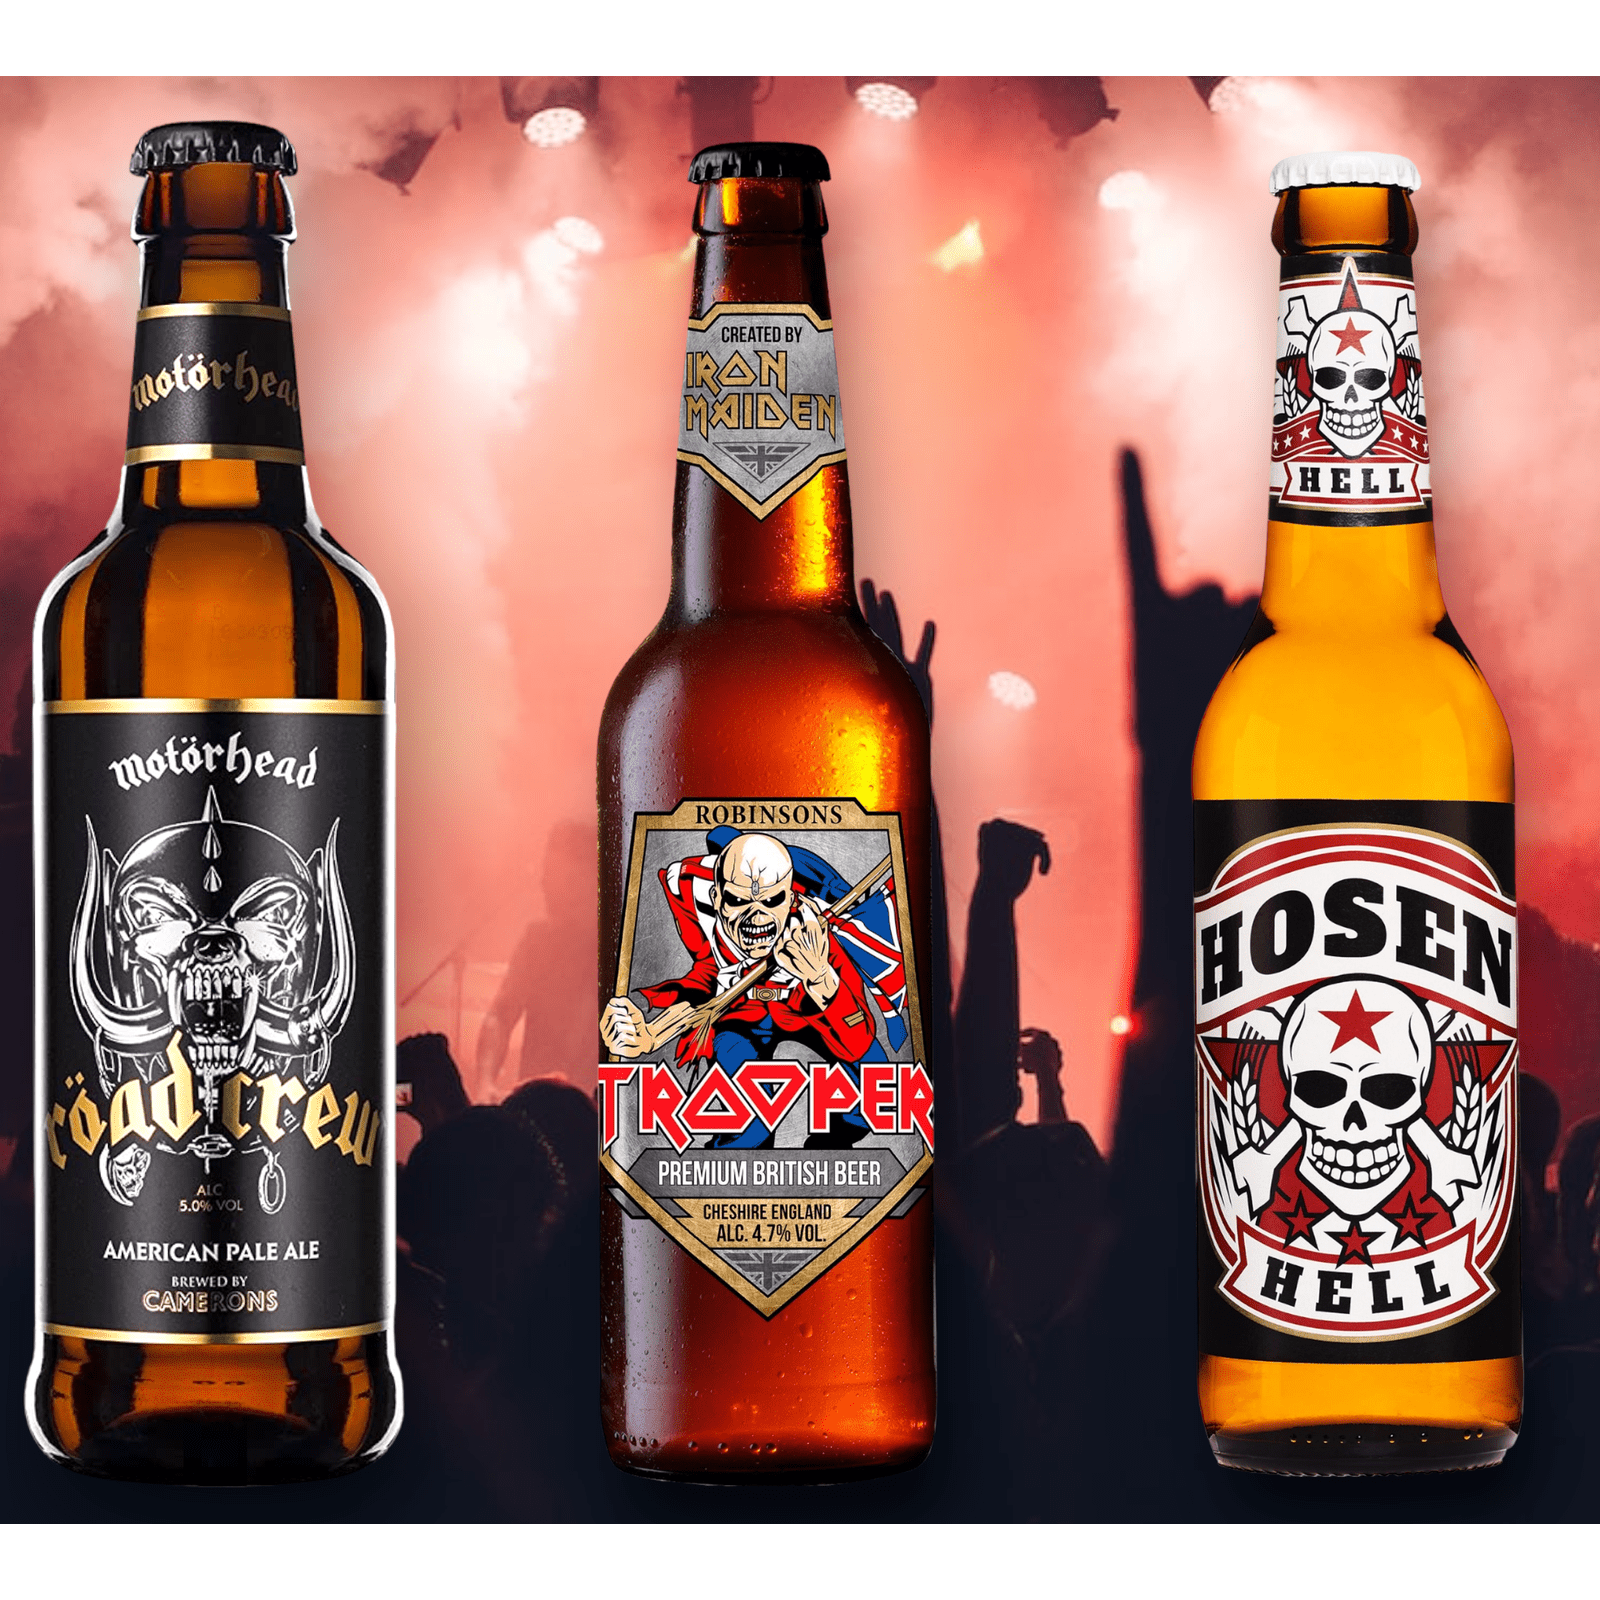 Musik Mix - Motörhead Road Crew Pale Ale - Trooper Premium British Beer- Hosen Hell Lager Bier je 0,33l